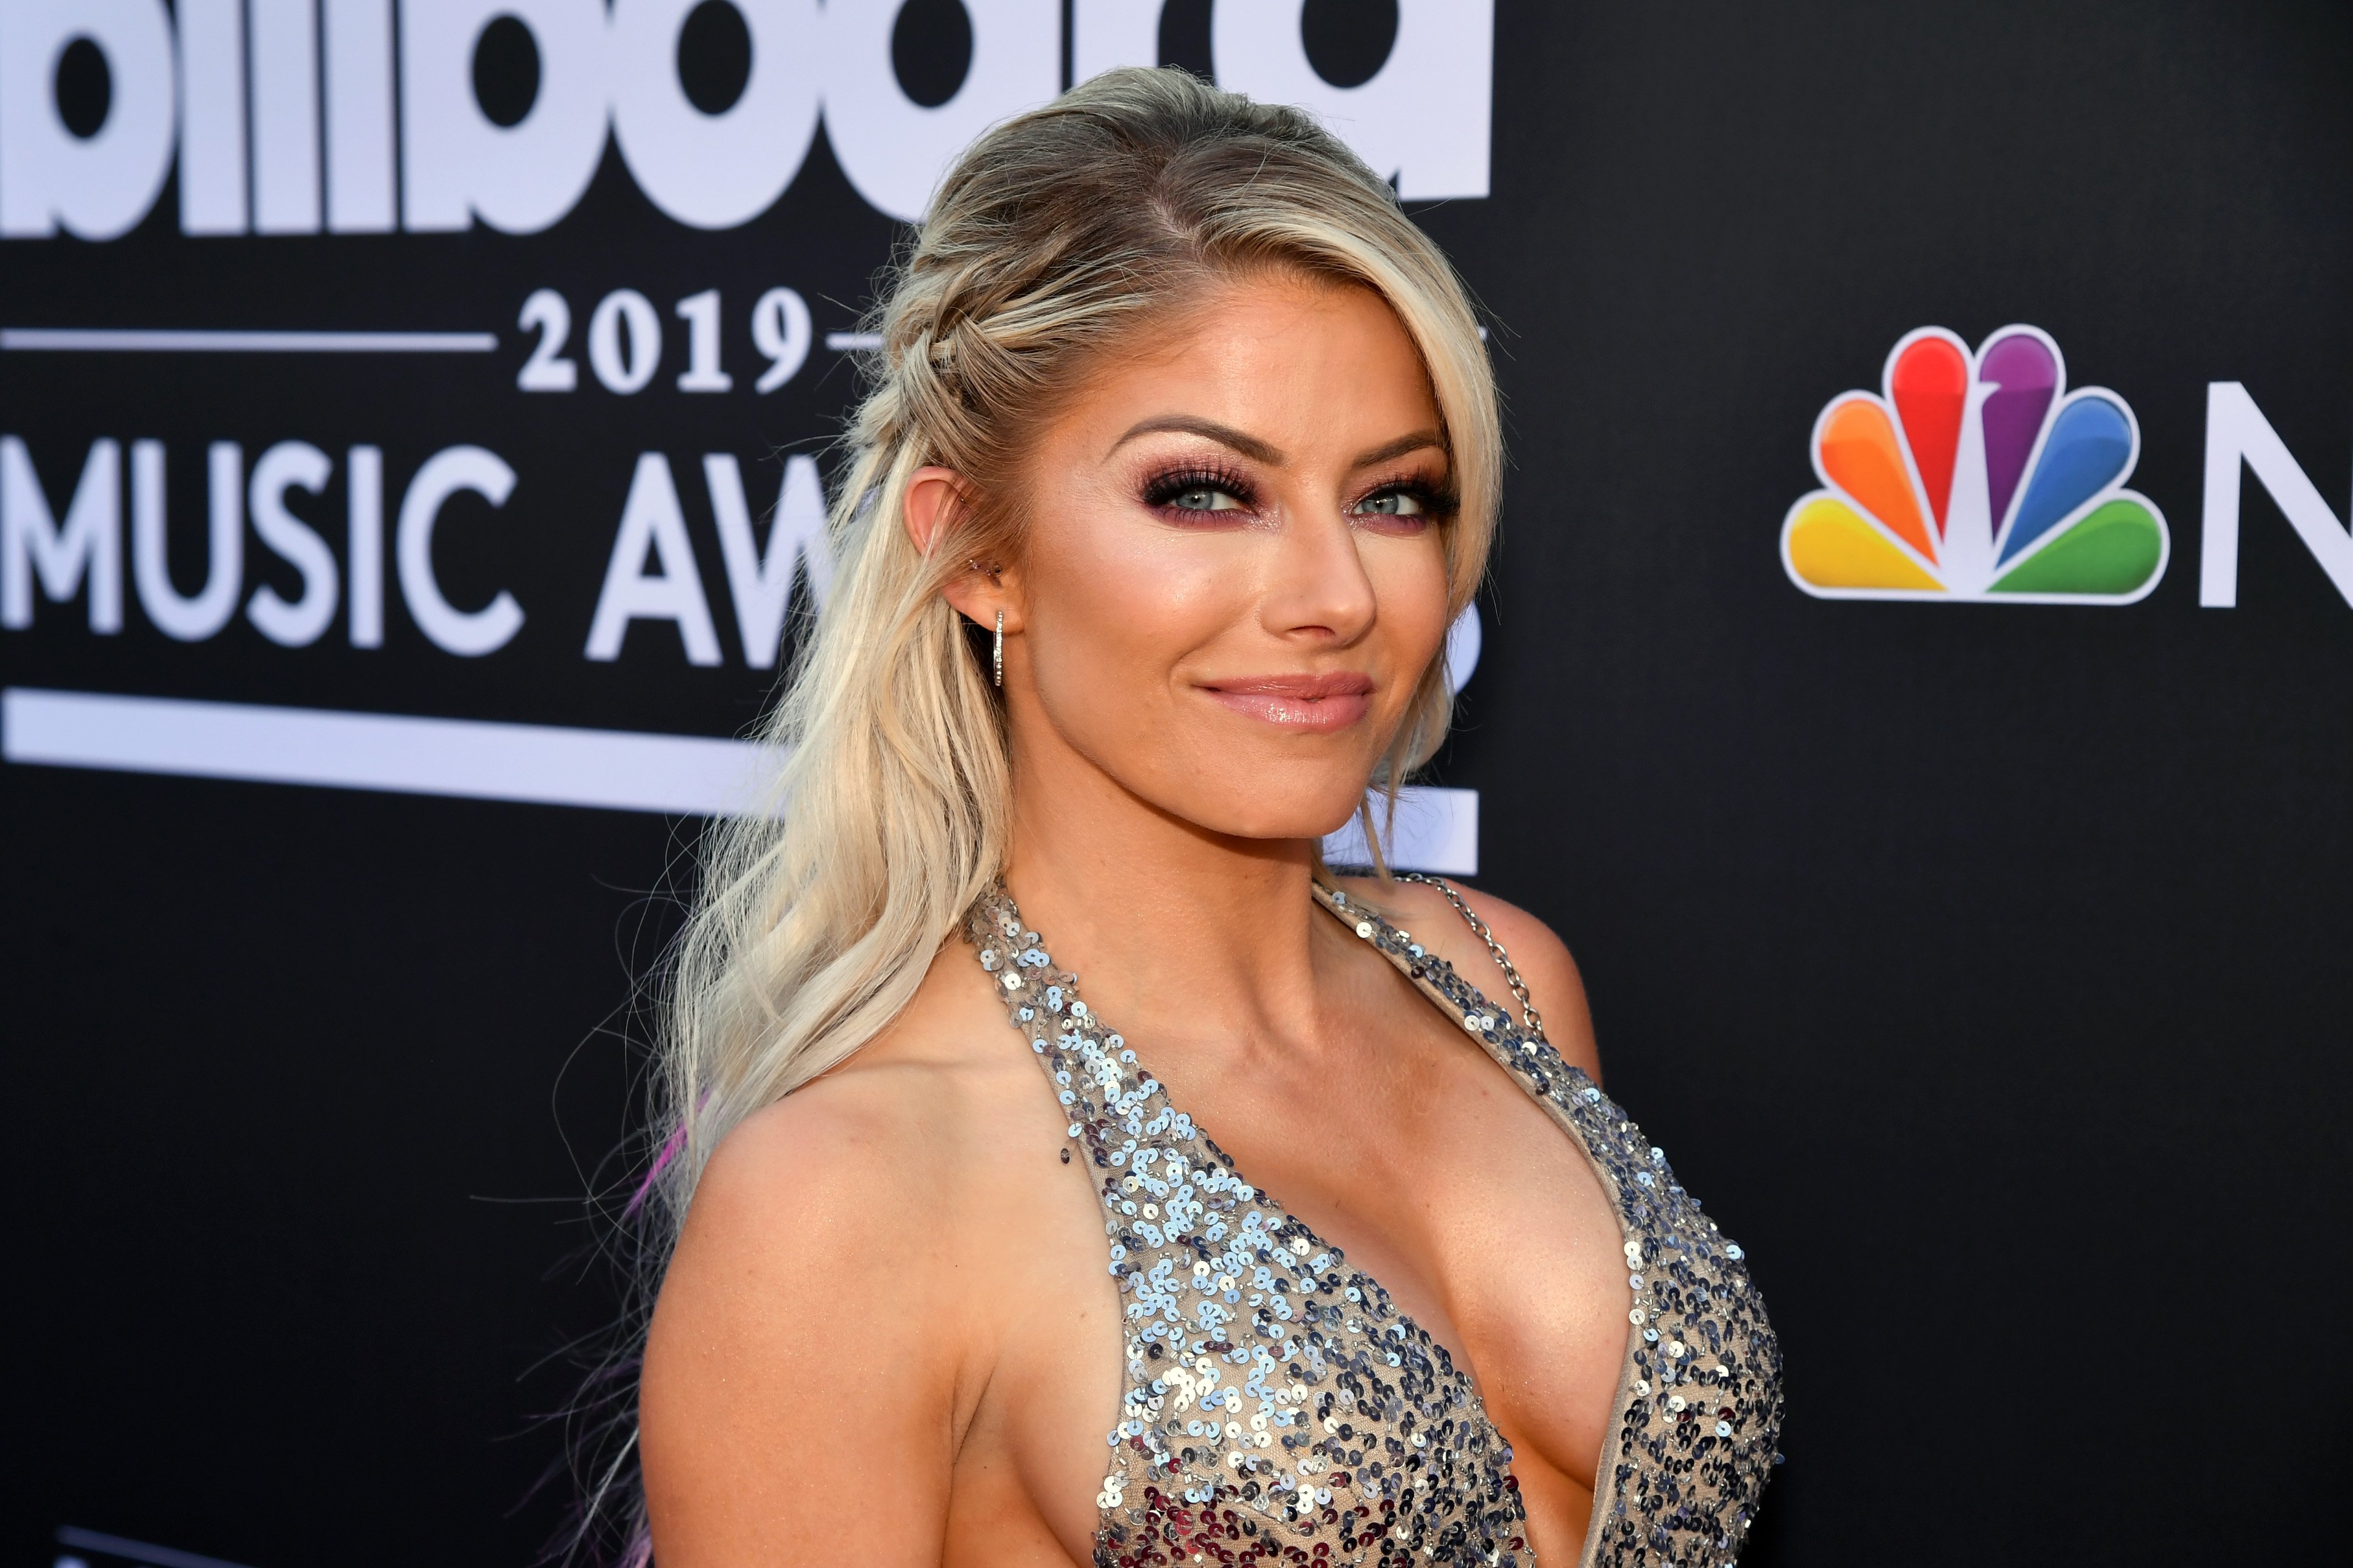 WWE star Alexa Bliss attends the 2019 Billboard Music Awards.